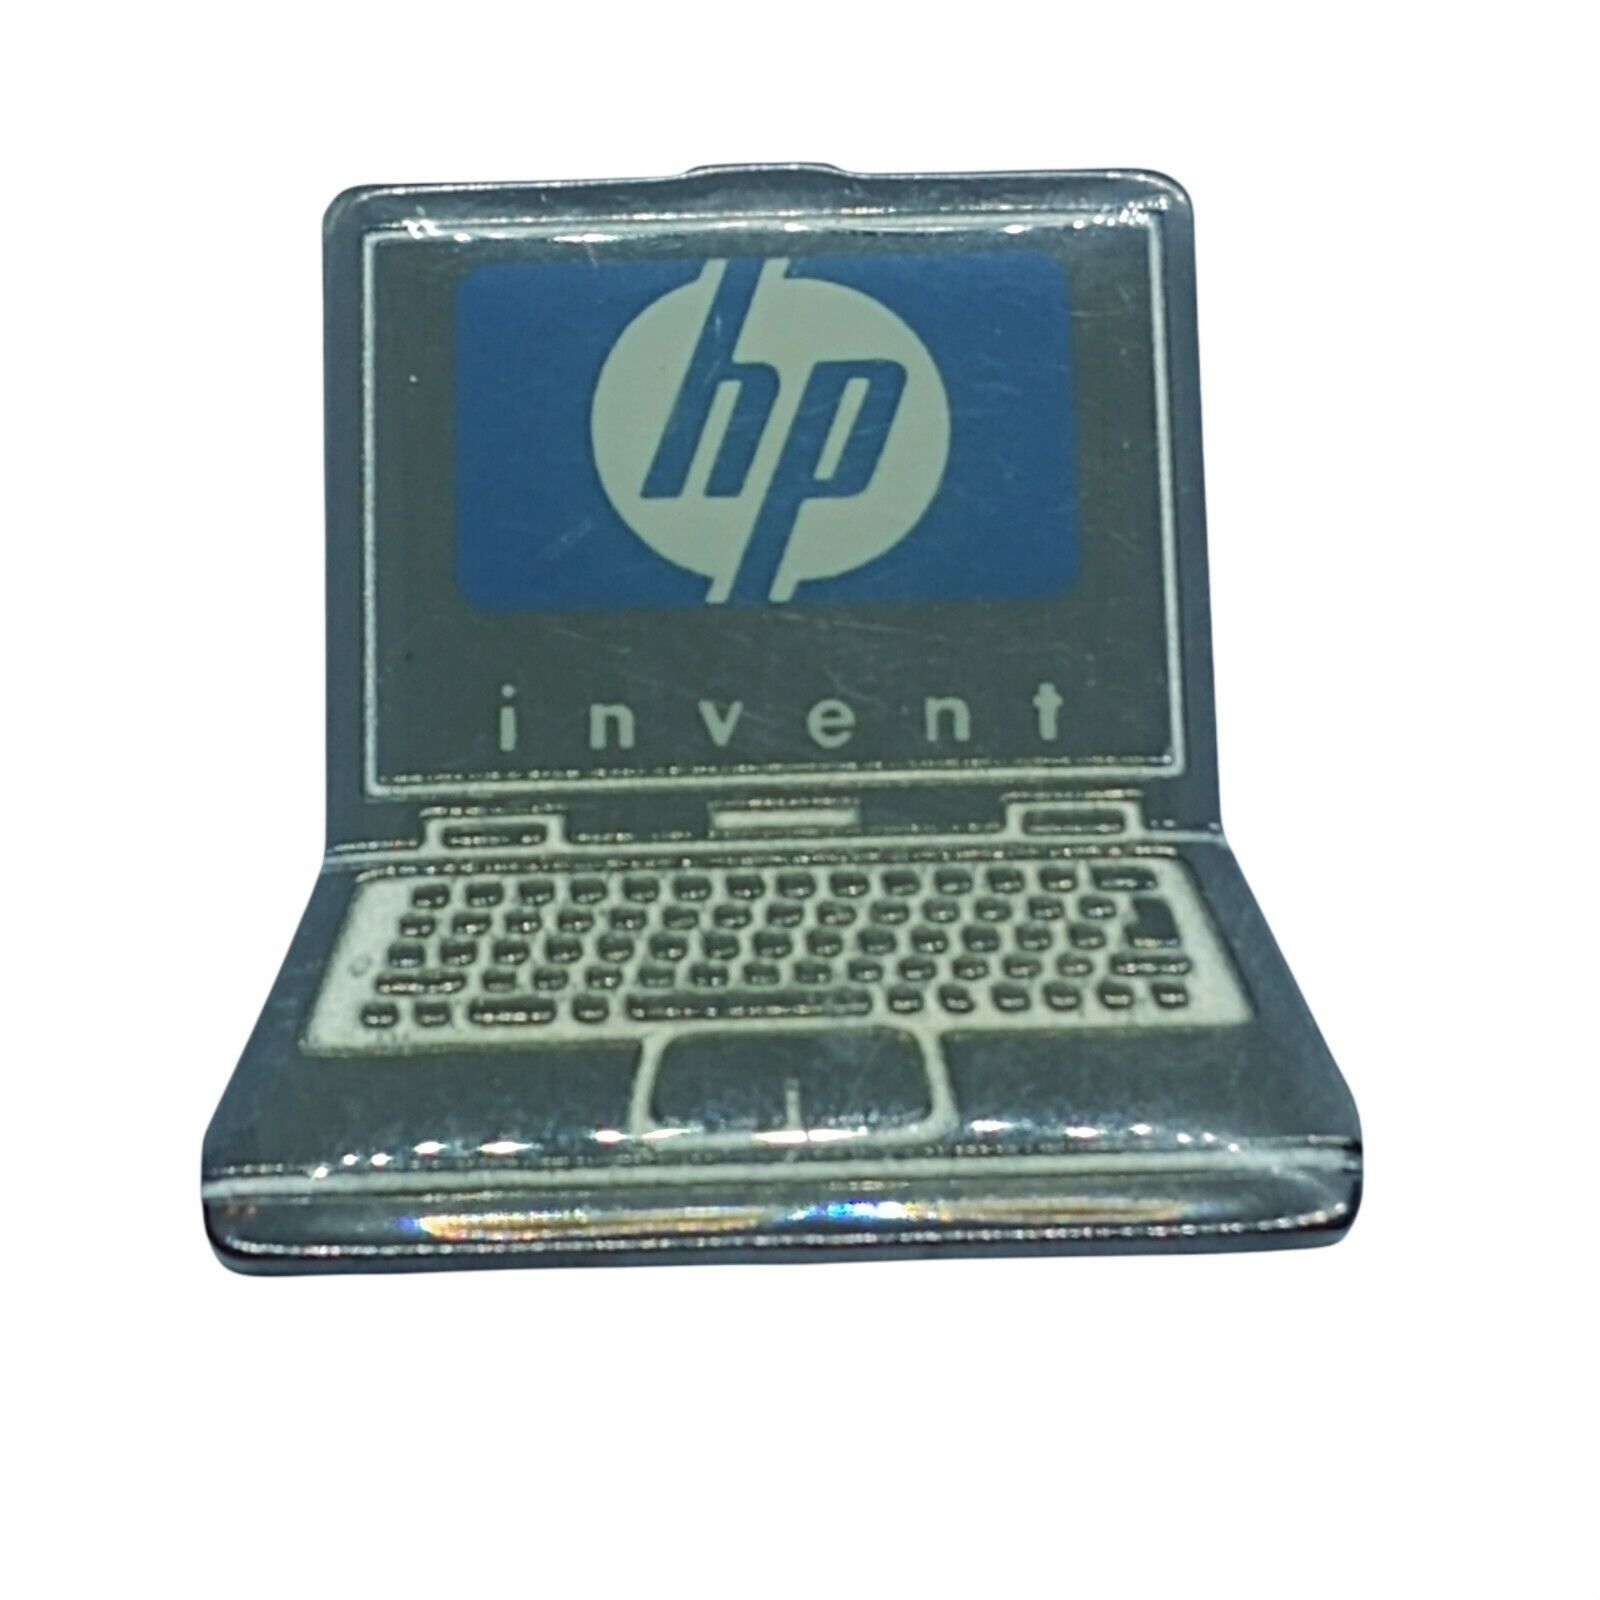 HP (HEWLETT PACKARD) INVENT PROMOTIONAL PIN 